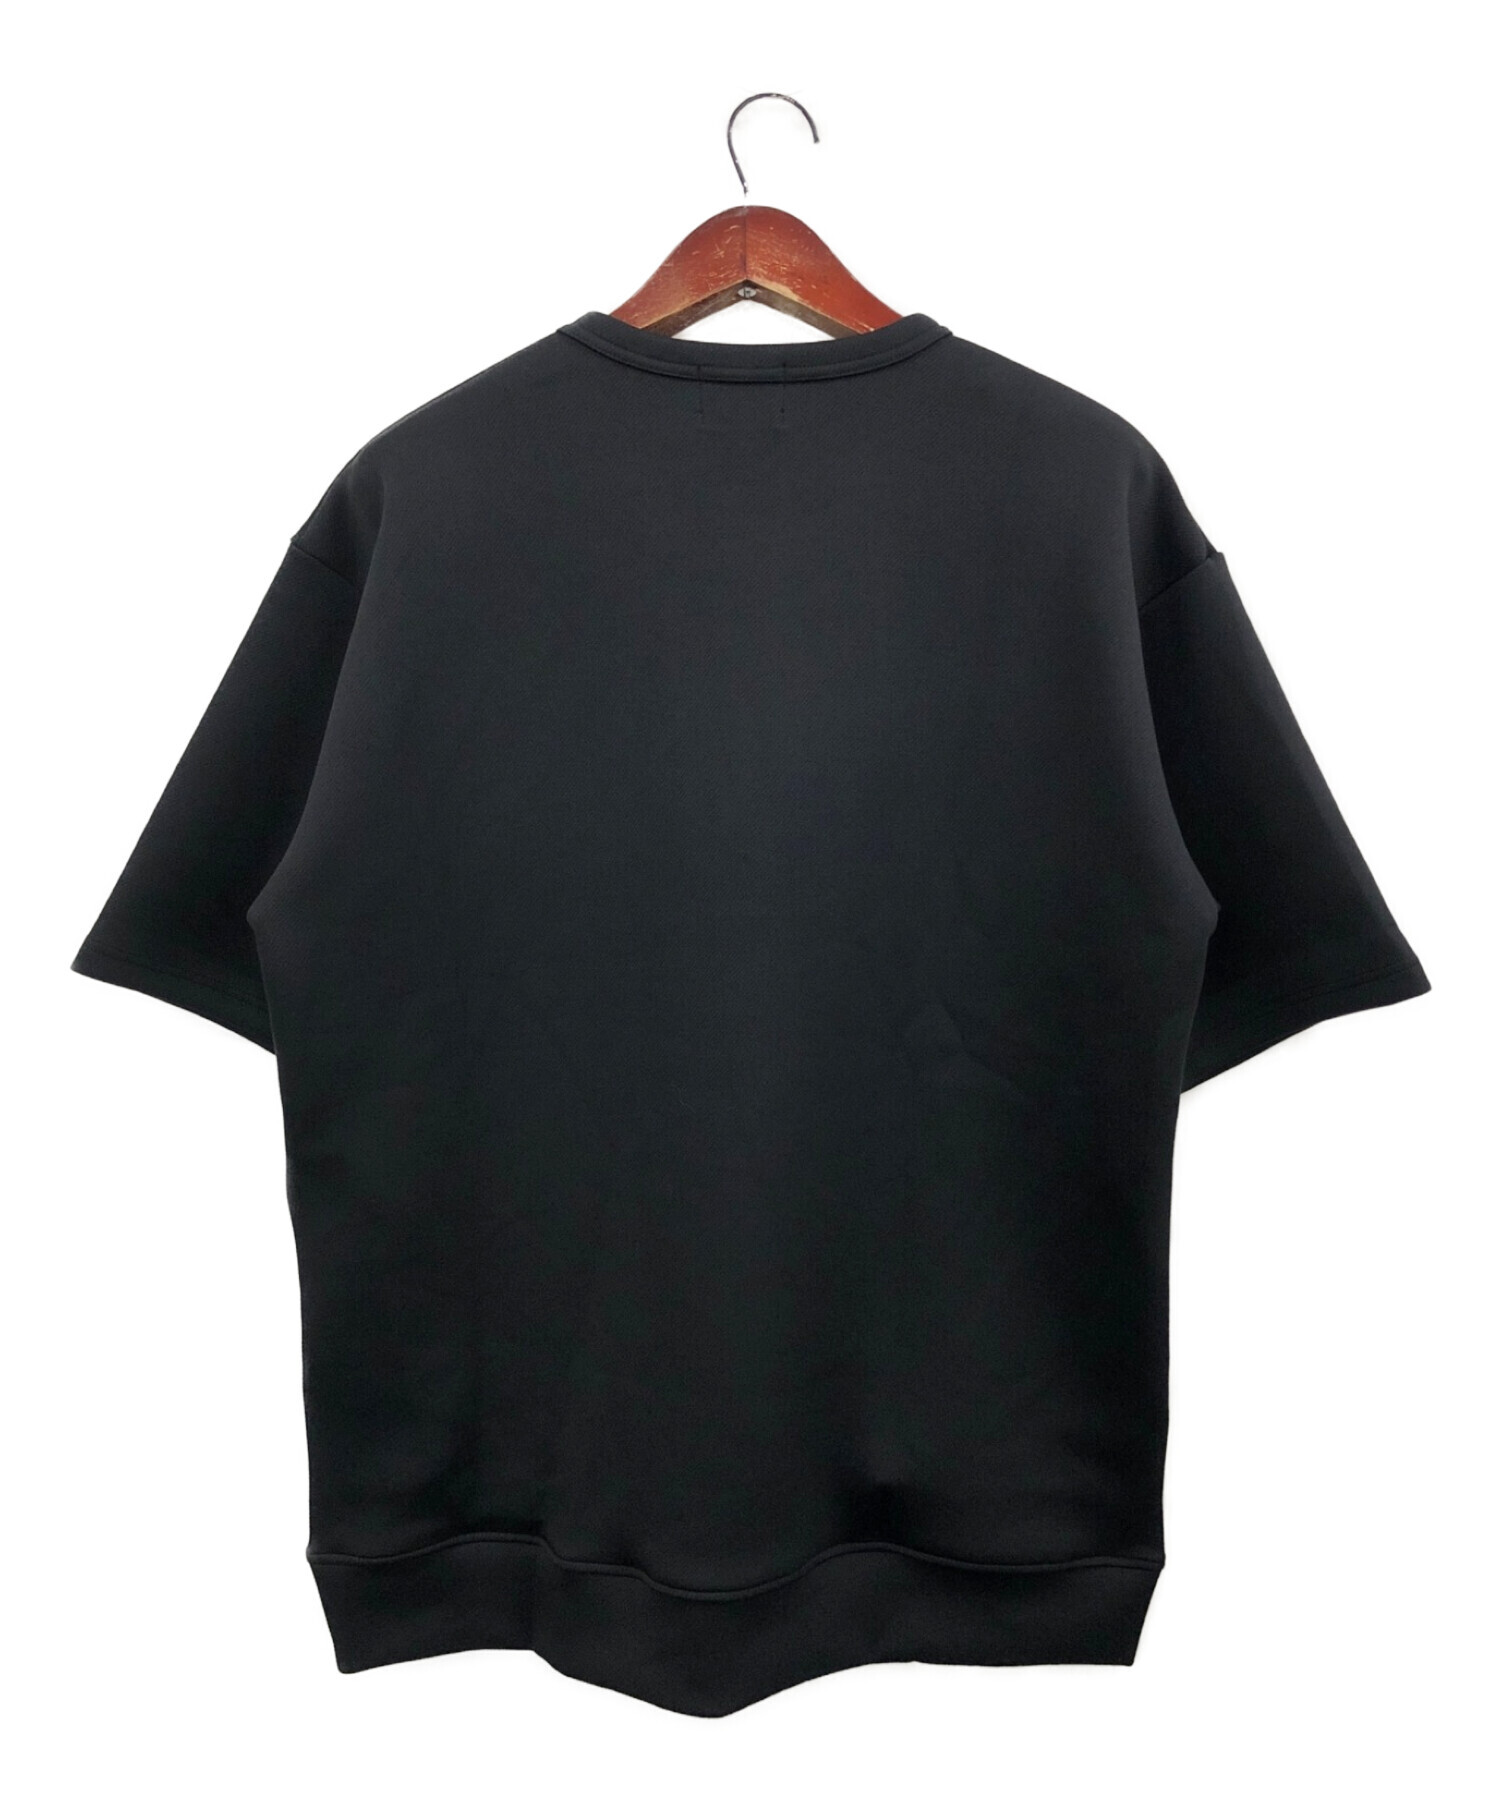 ReZARD (リザード) 村上隆 (ムラカミ タカシ) Flower Short sleeve Sweatshirts ブラック サイズ:M